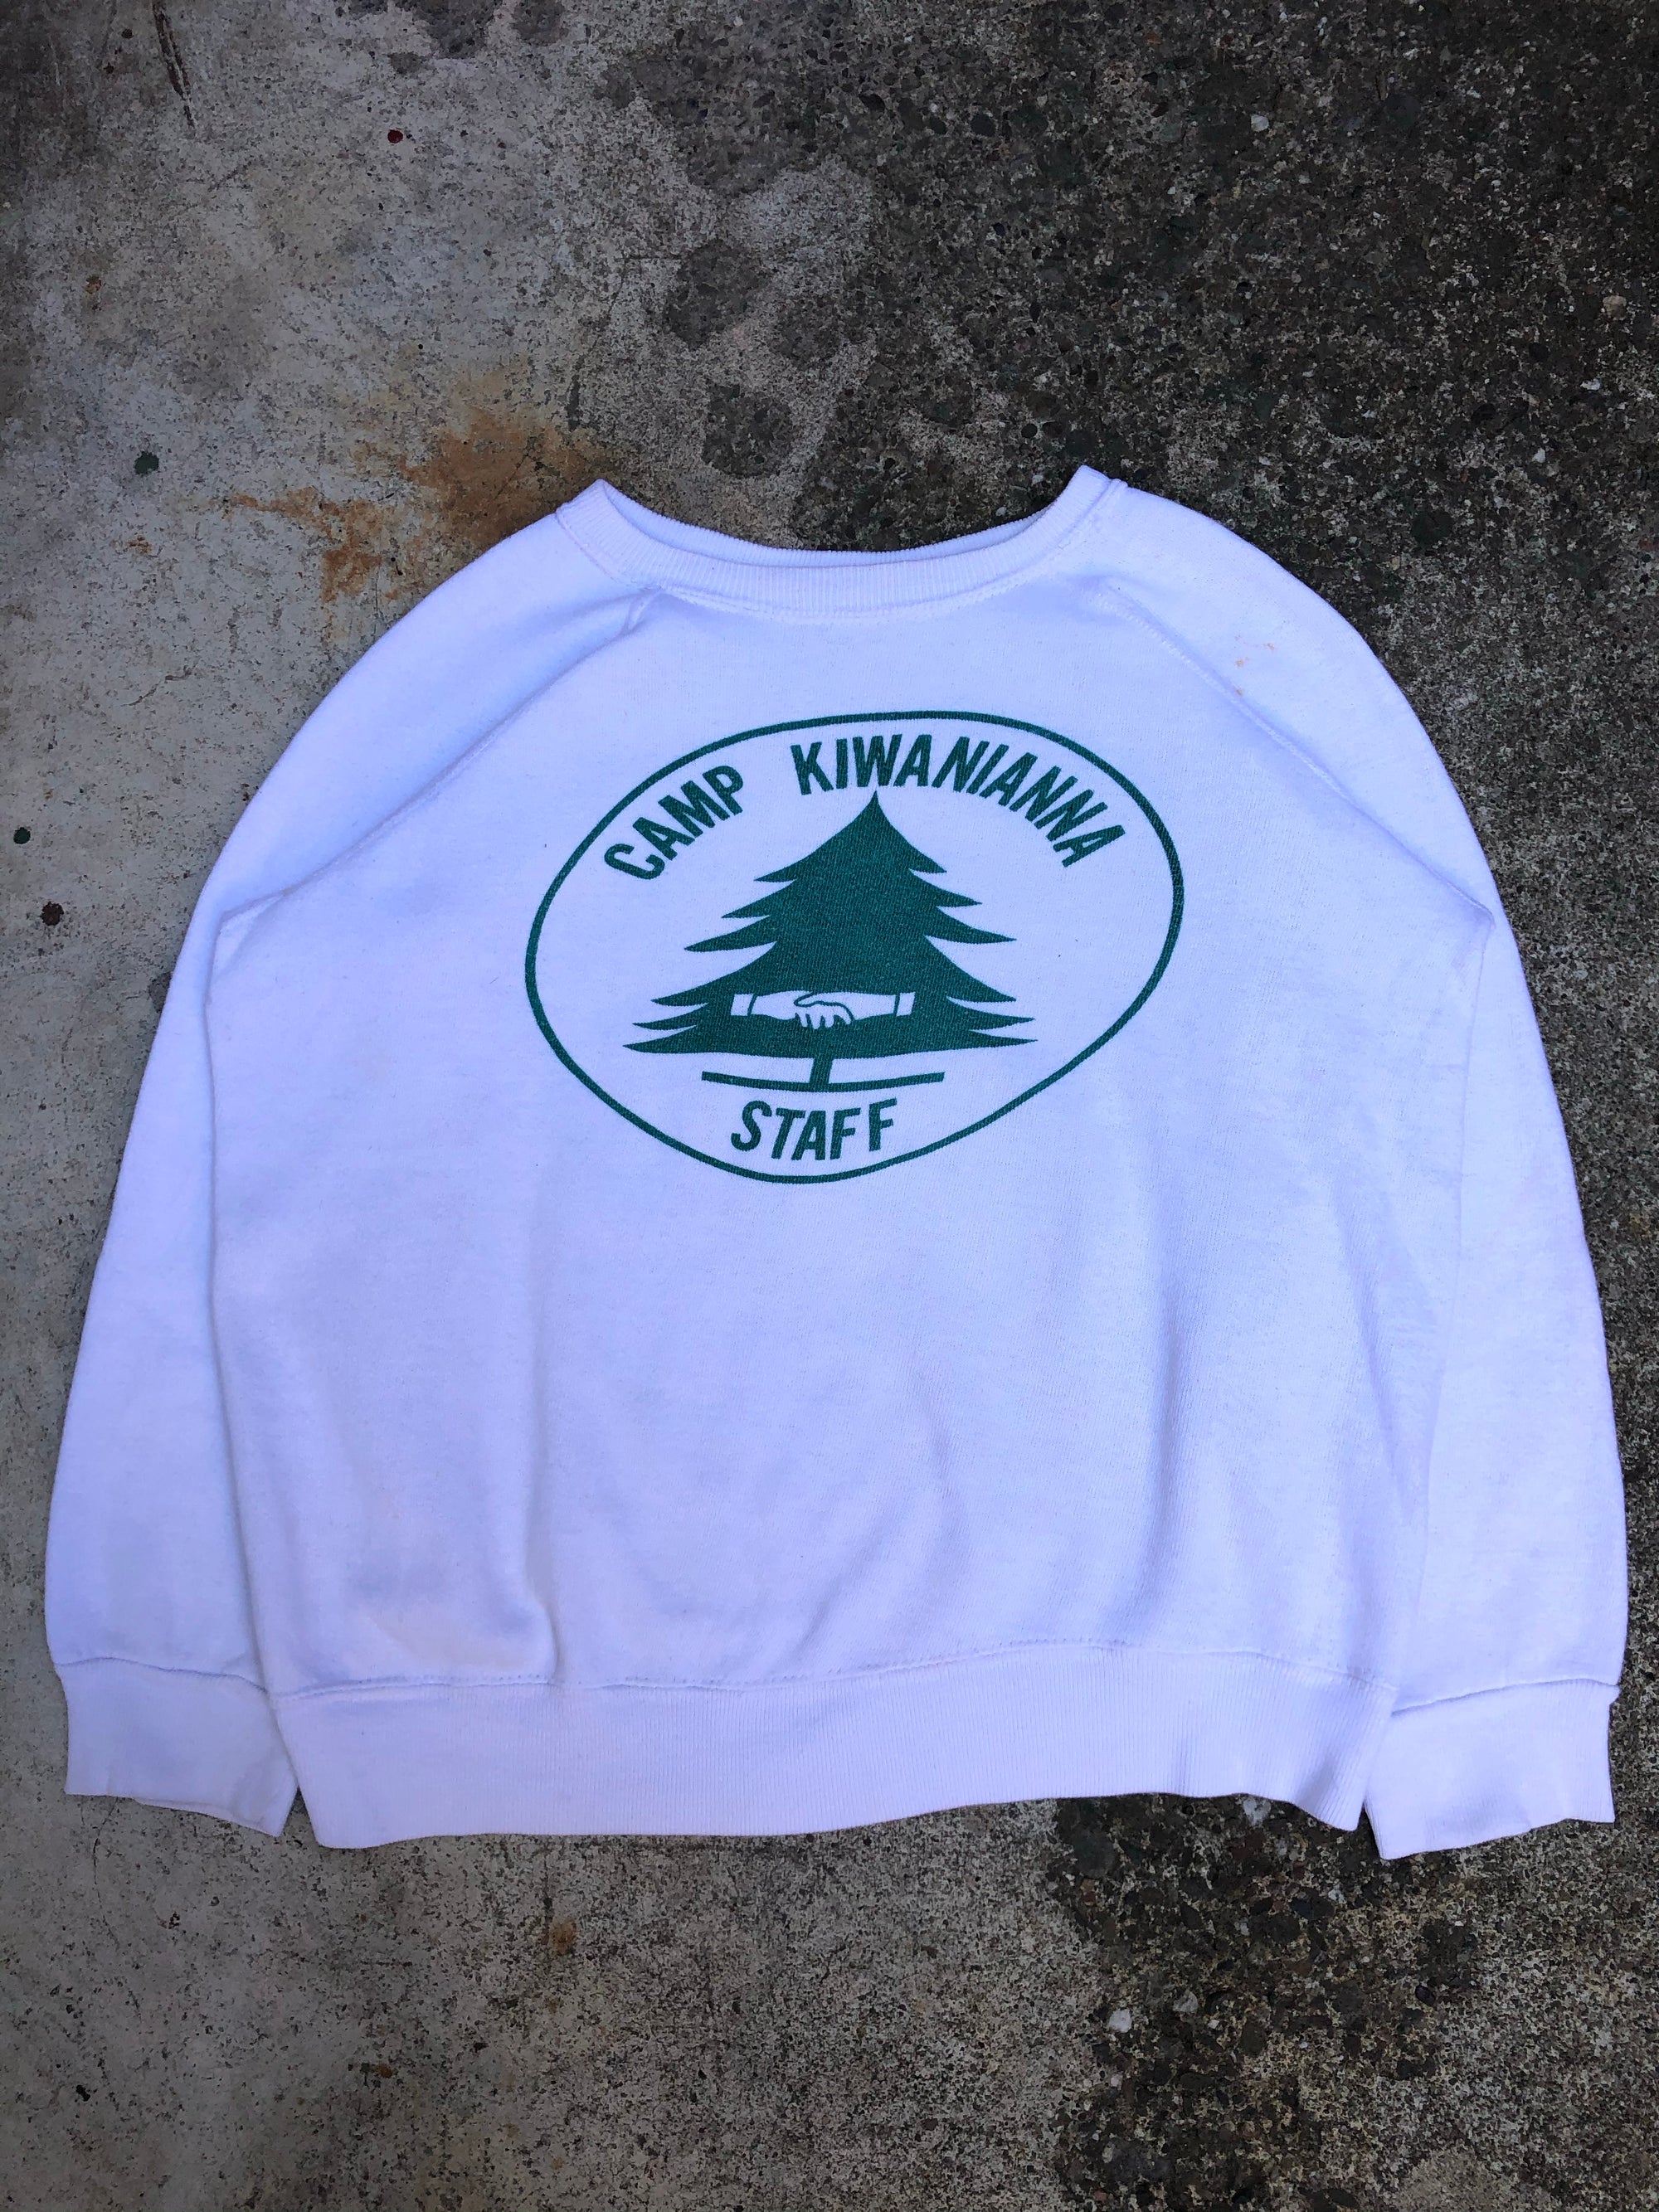 1960s White “Camp Kiwanianna” Raglan Sweatshirt